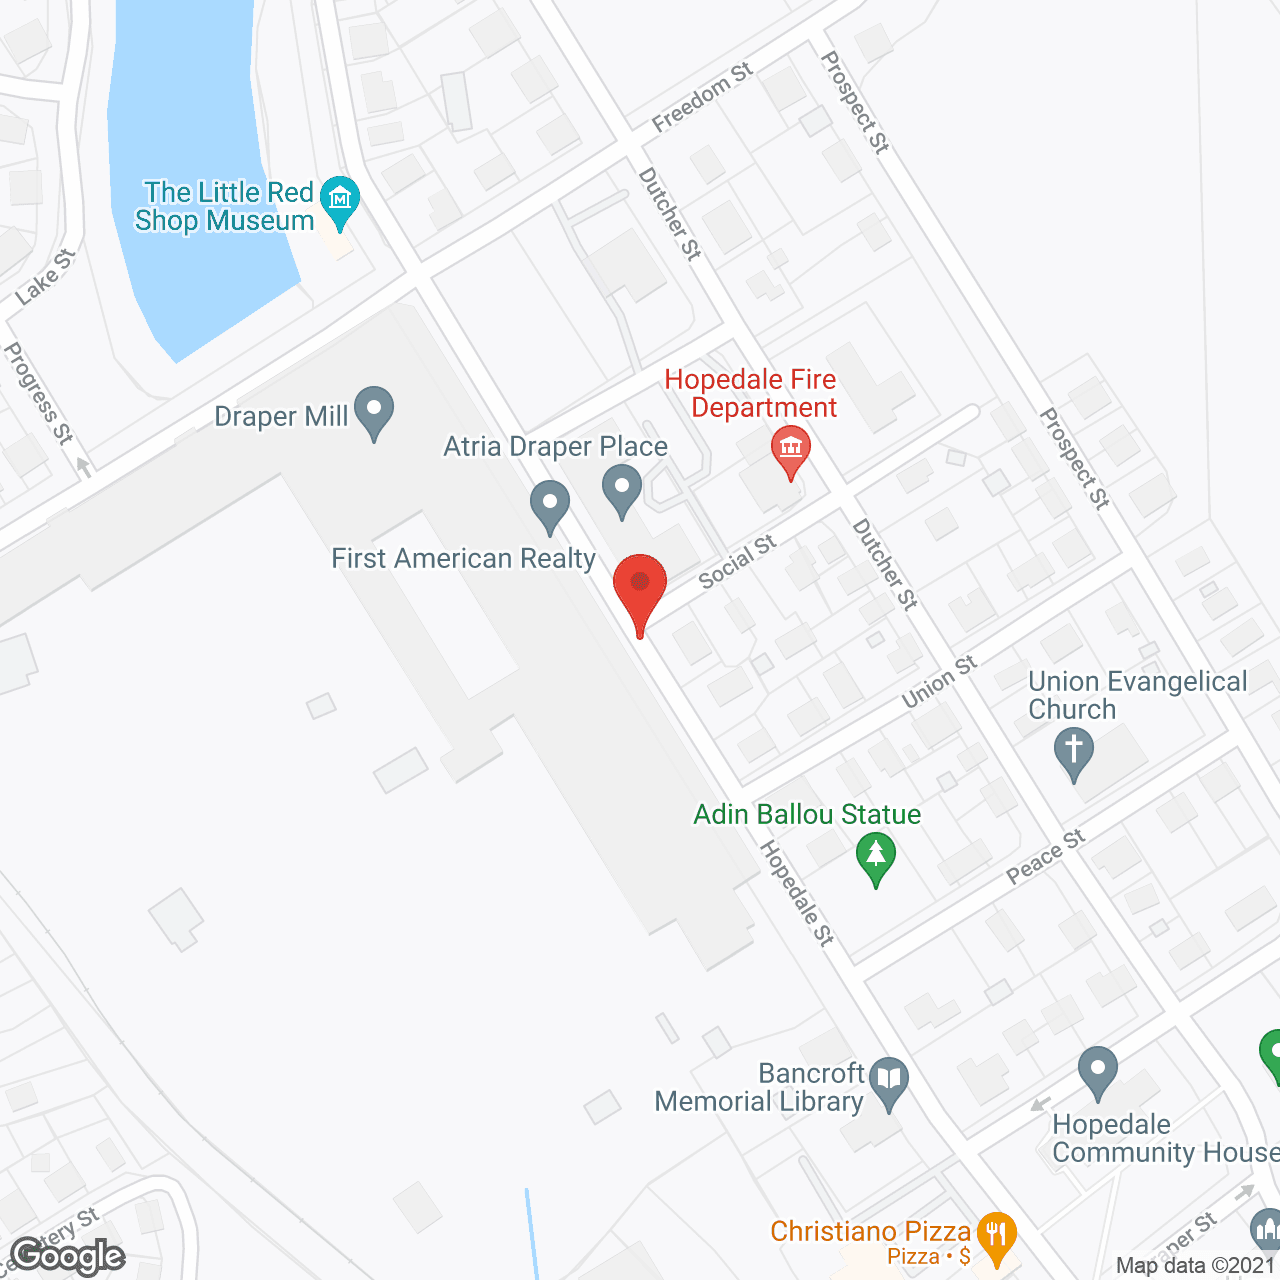 Atria Draper Place in google map